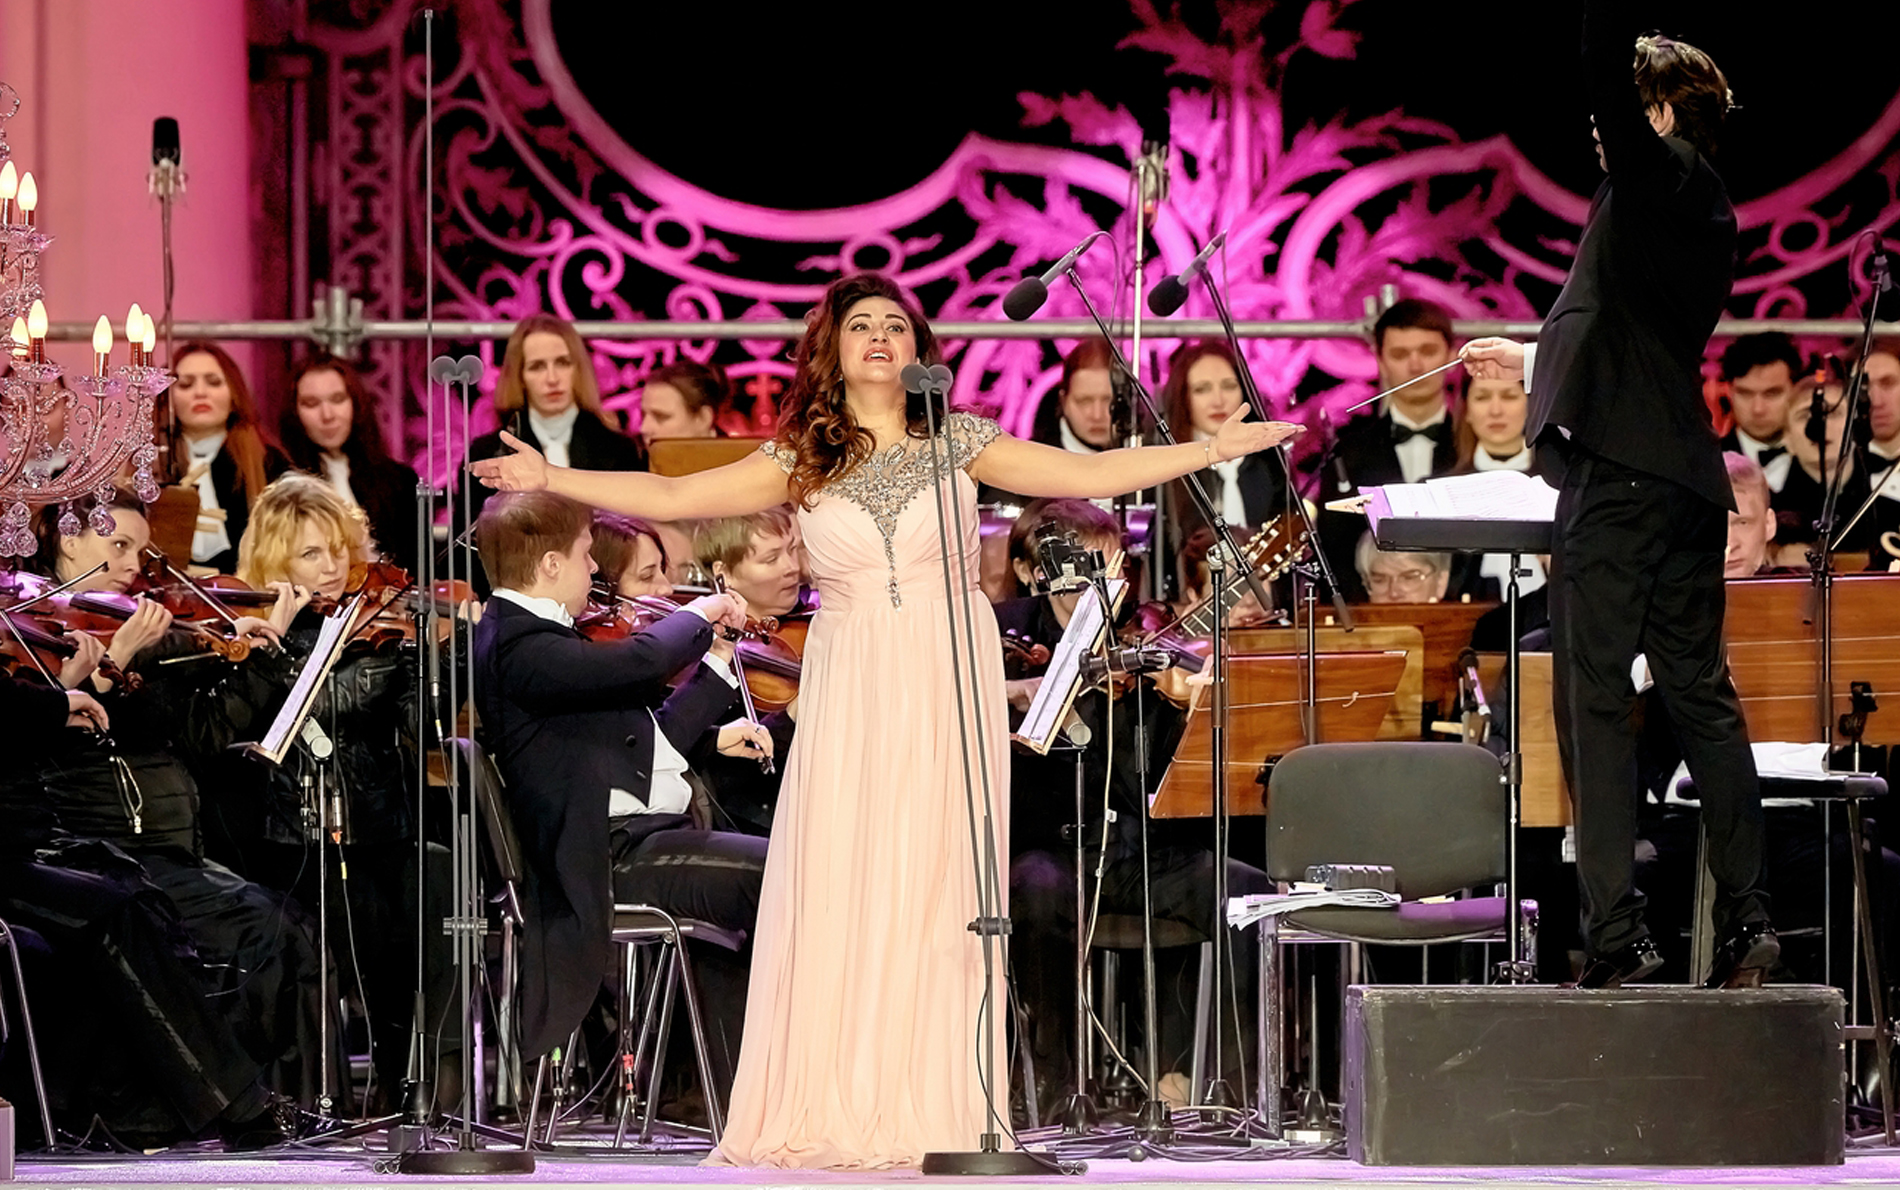 Gala concert on Palace Square in Saint Petersburg | mezzo.tv